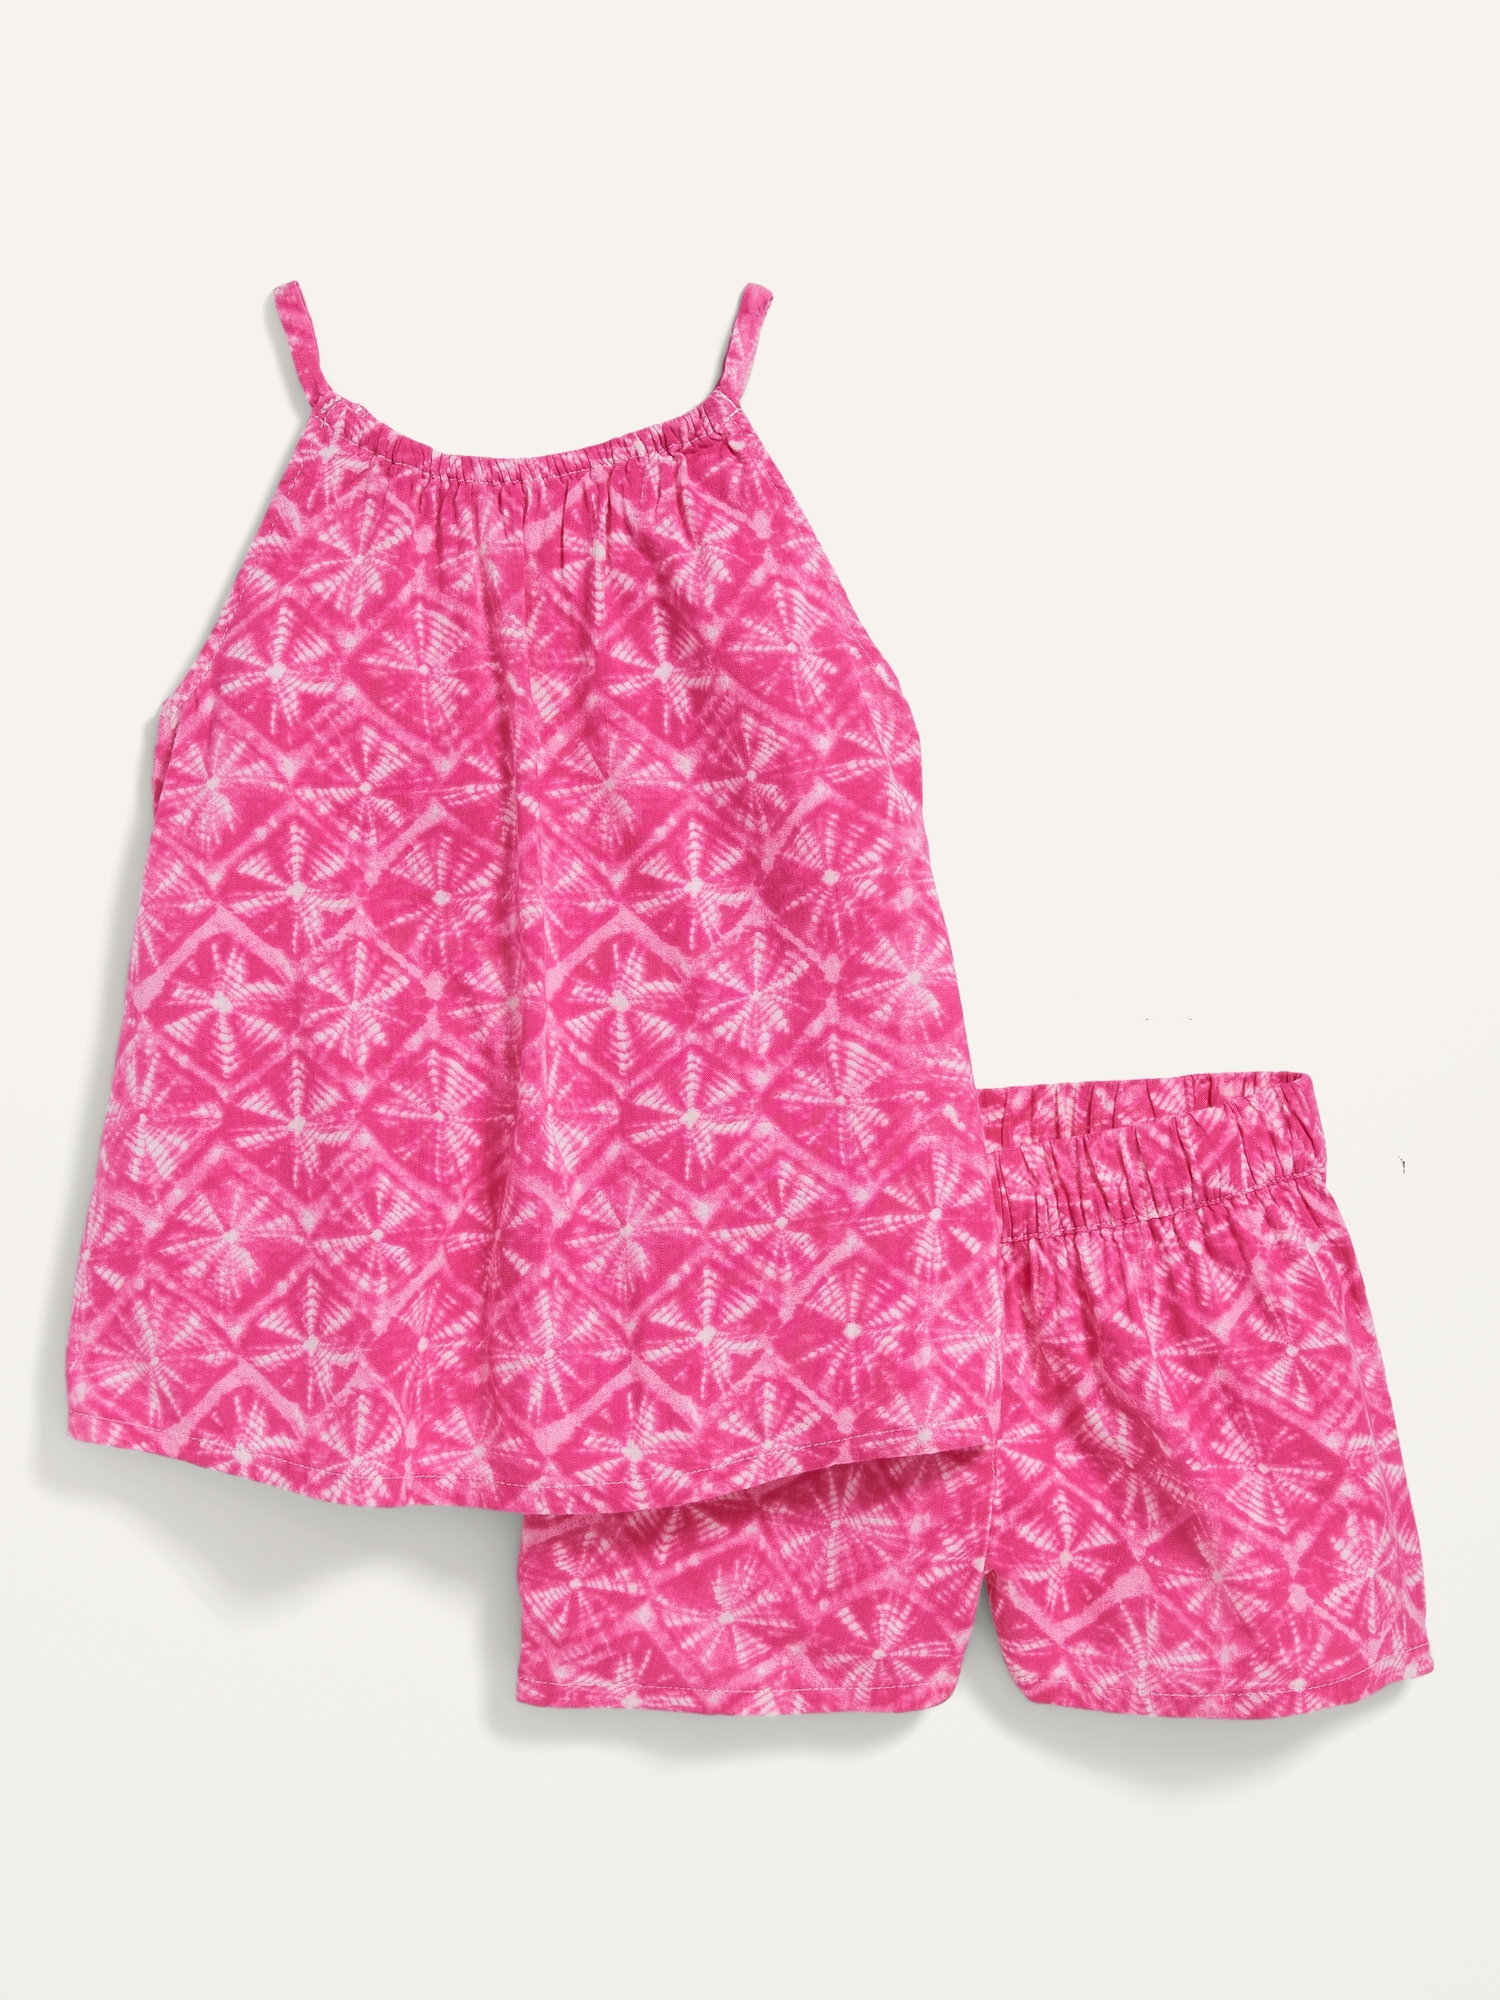 Printed Sleeveless Top & Shorts 2-Piece Set for Toddler Girls